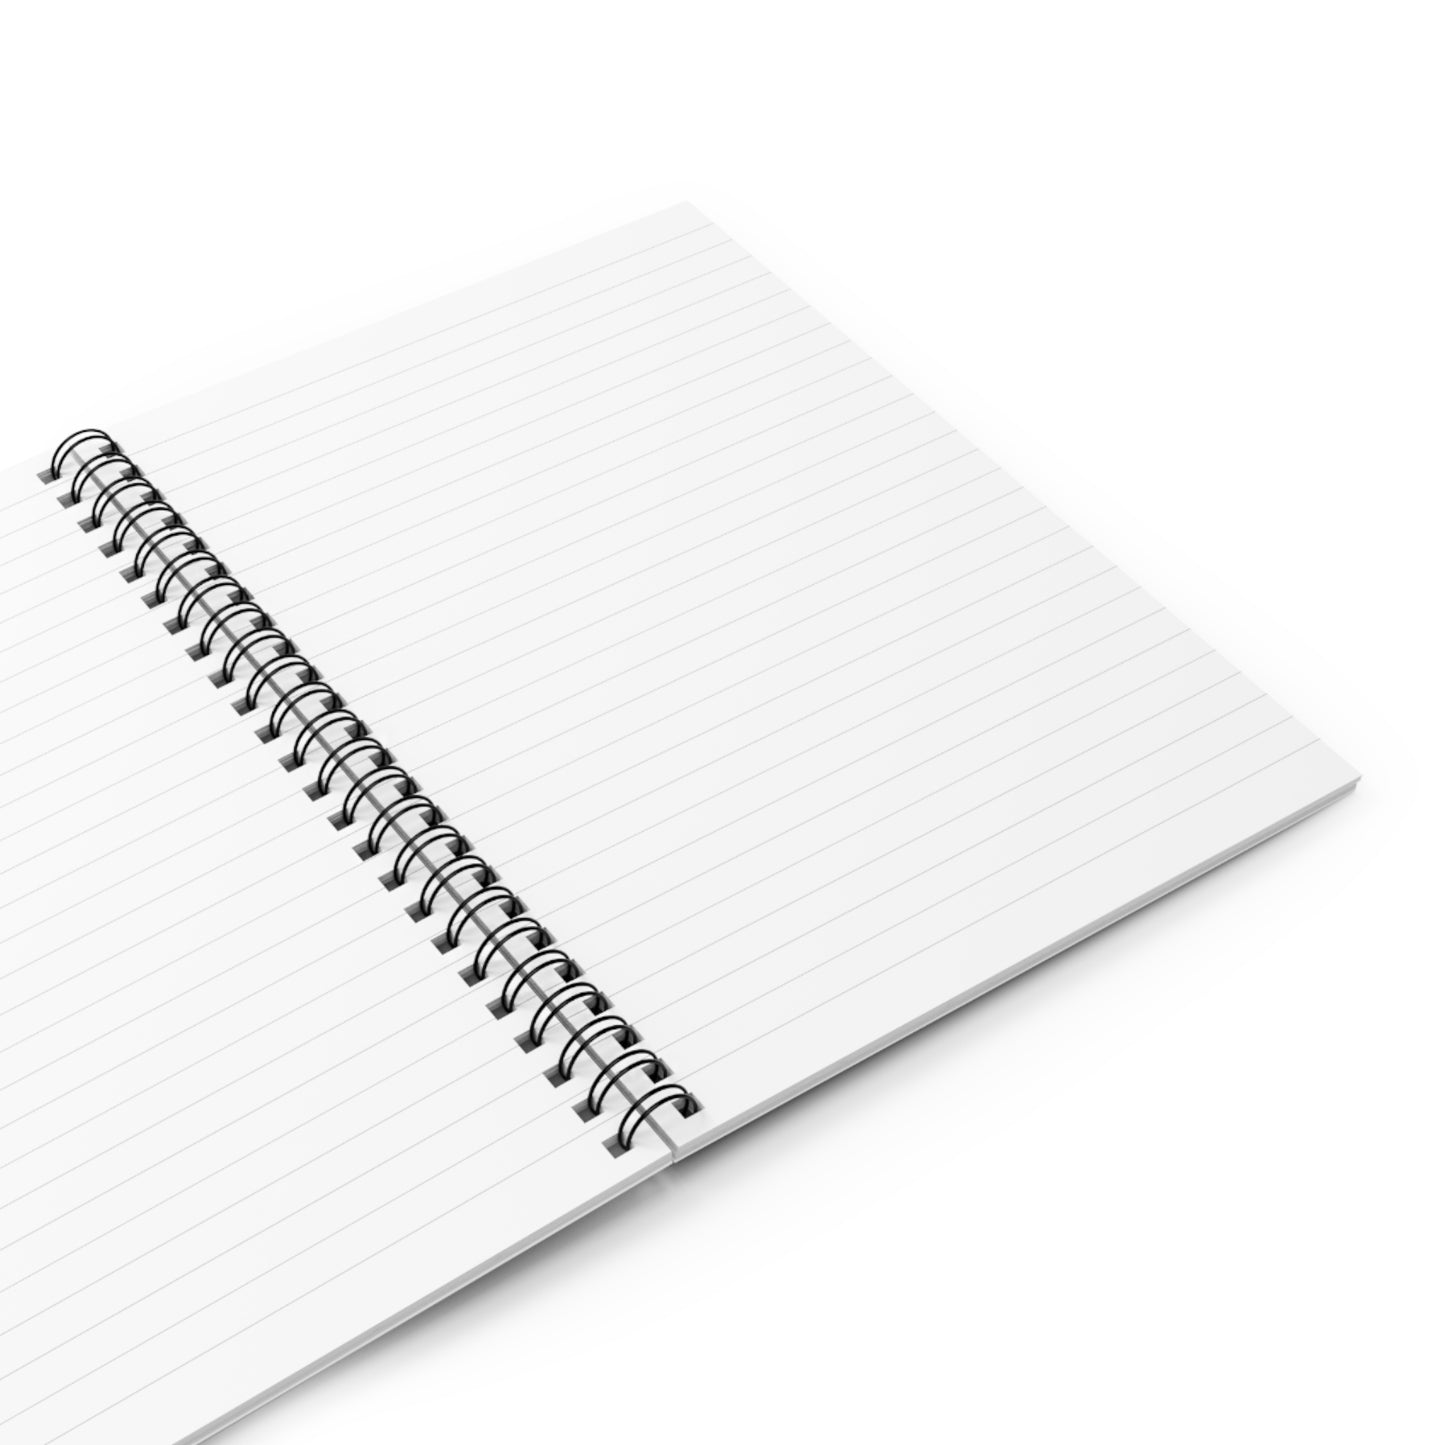 Dodge Sweptline Notebook - Ruled Line